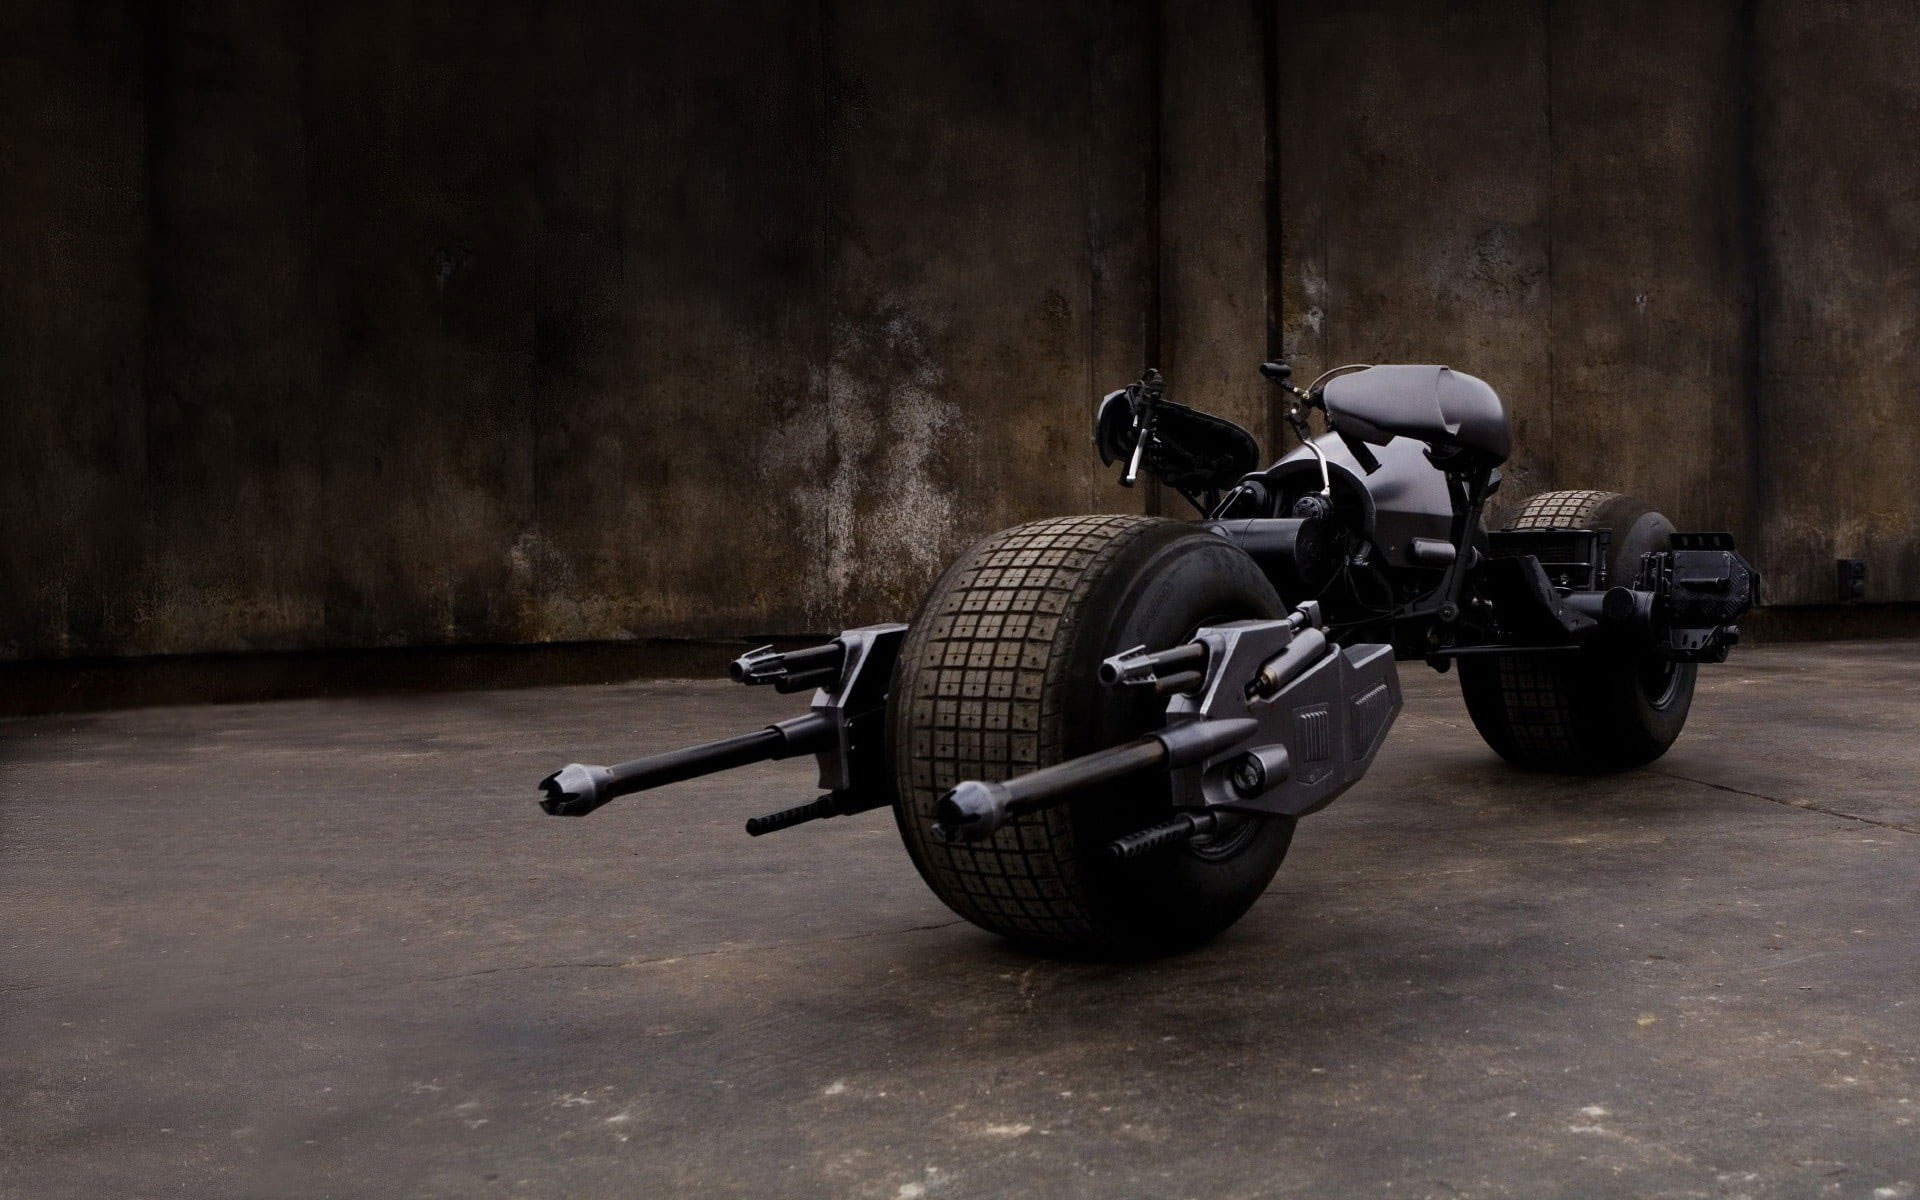 Batman’s Bat bike wallpaper, motorcycle, Batpod, The Dark Knight, transportation